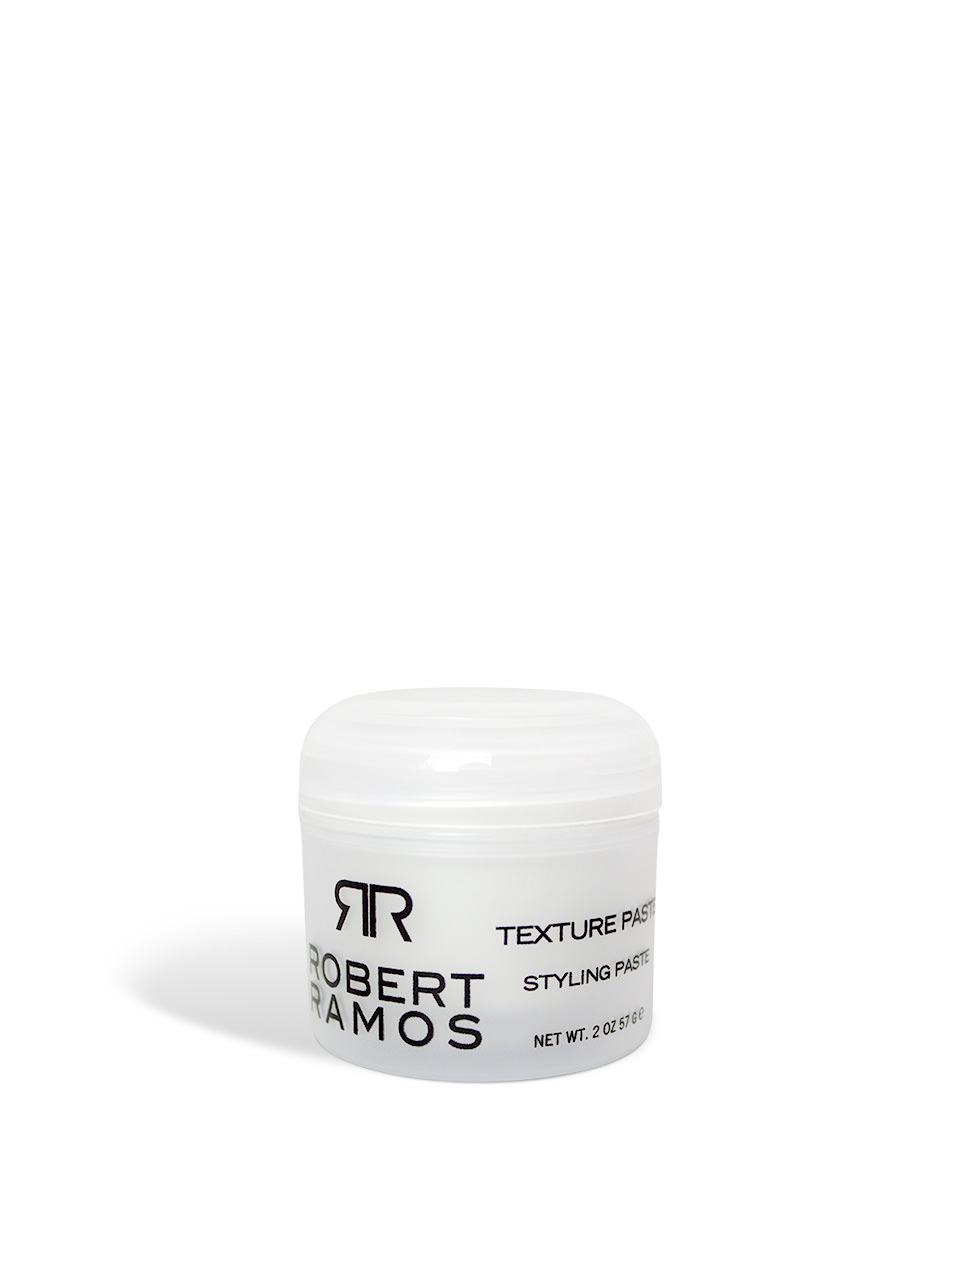 Texture Paste — Robert Ramos Products